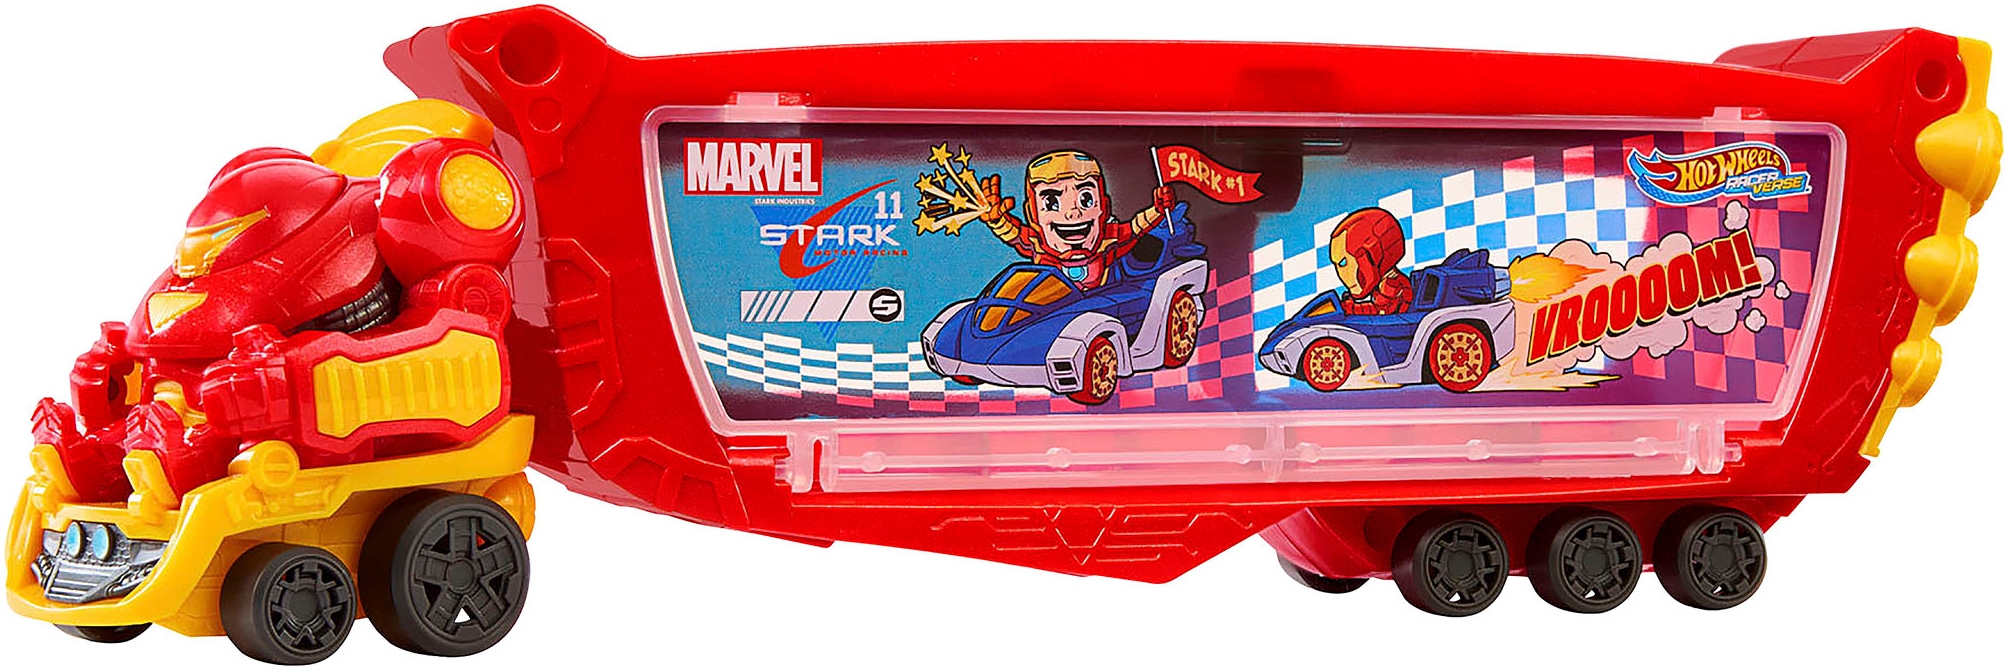 Hot Wheels Spielzeug-Transporter »RacerVerse, Marvel Hulkbuster«